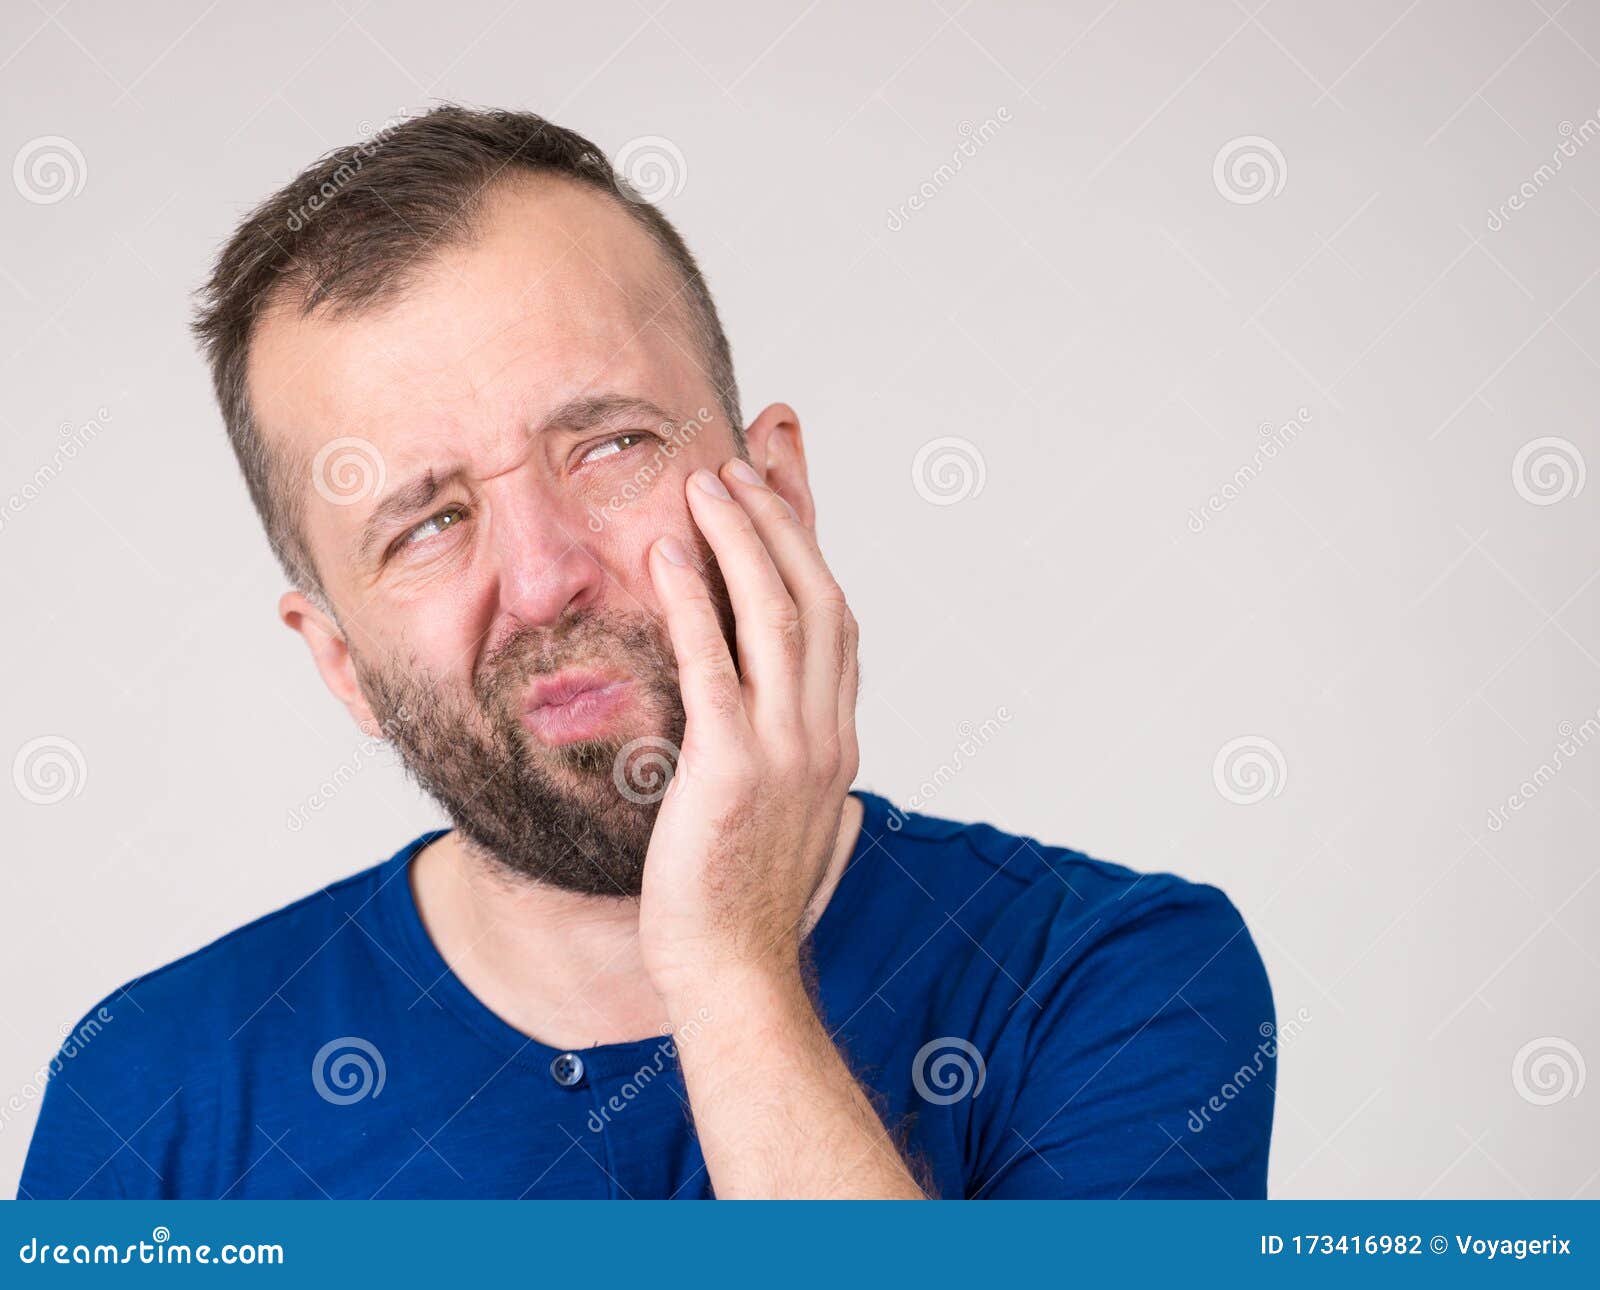 Man having tooth pain stock photo. Image of pain, ache - 173416982